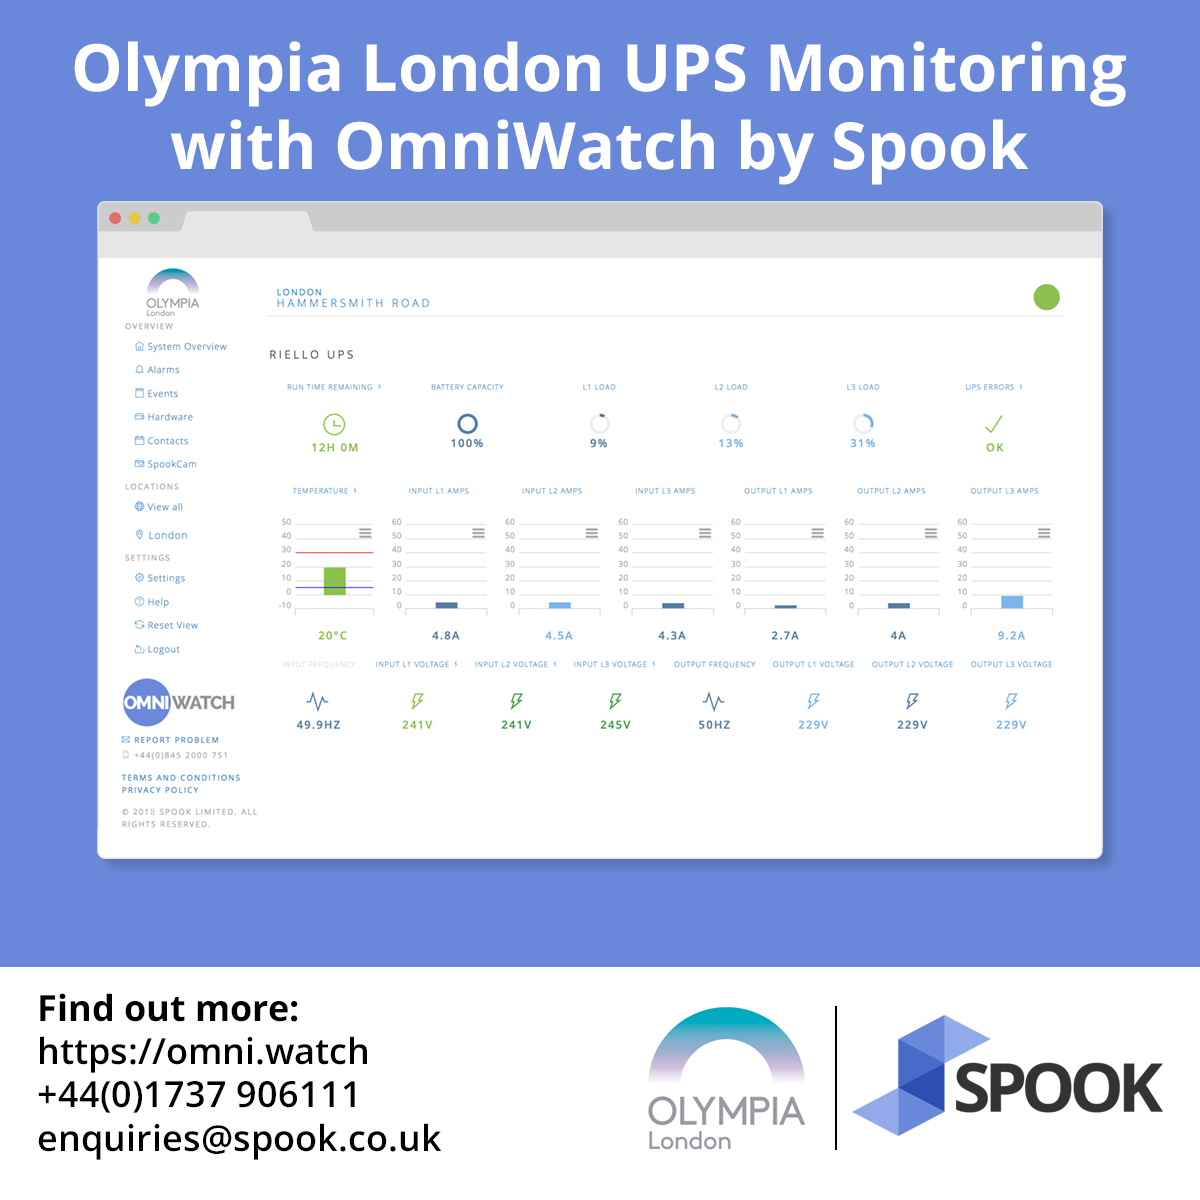 olympia-london-ups-monitoring